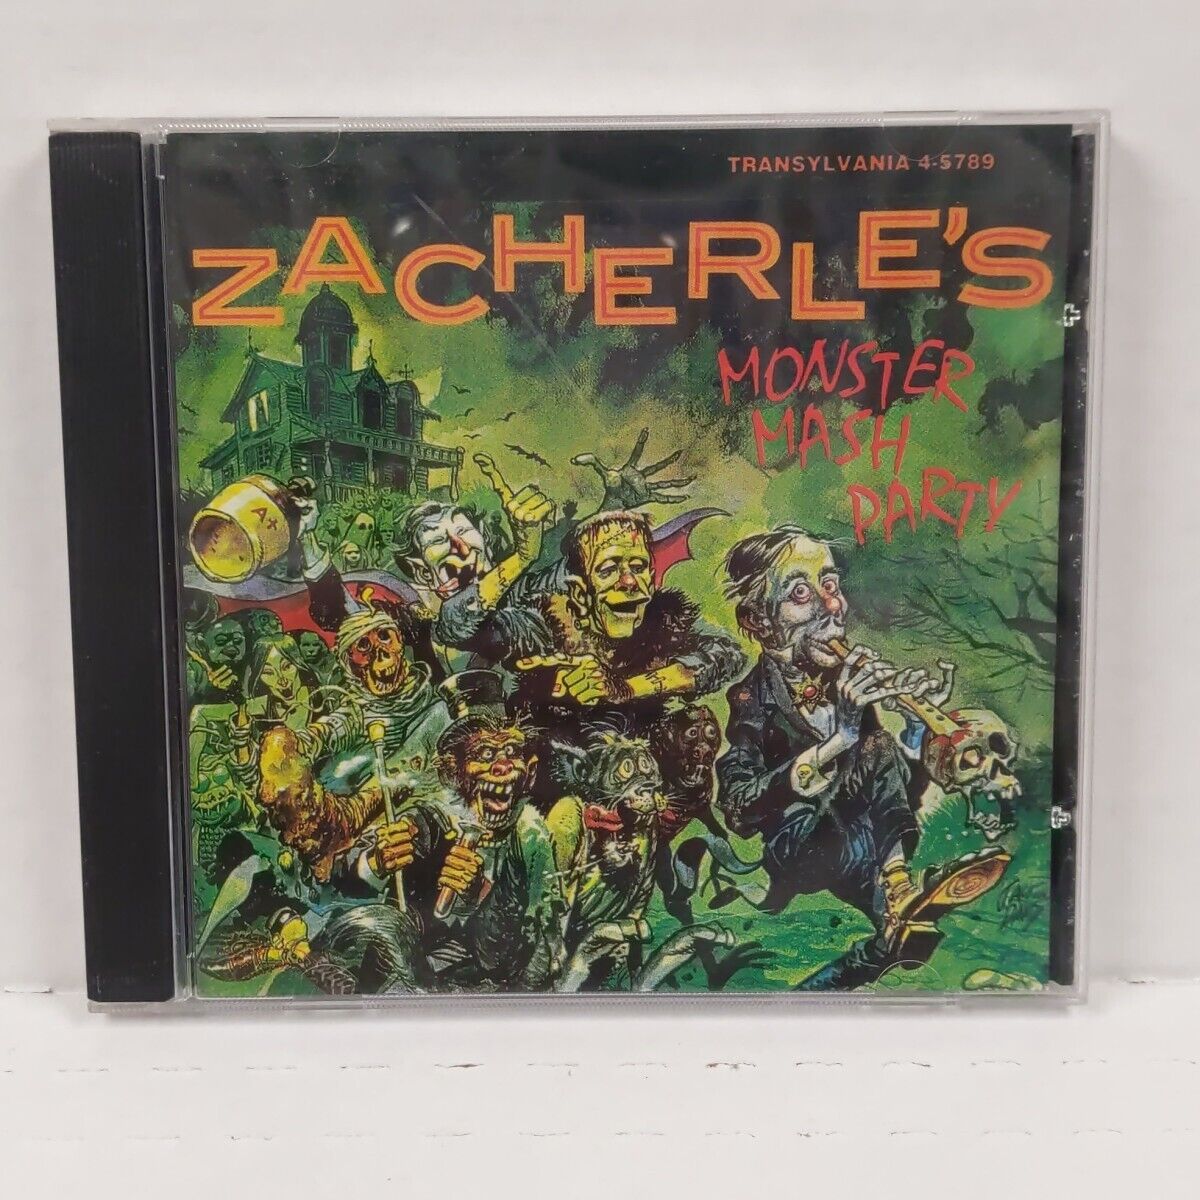 Vintage Rare ZACHERLE'S MONSTER MASH PARTY Halloween CD